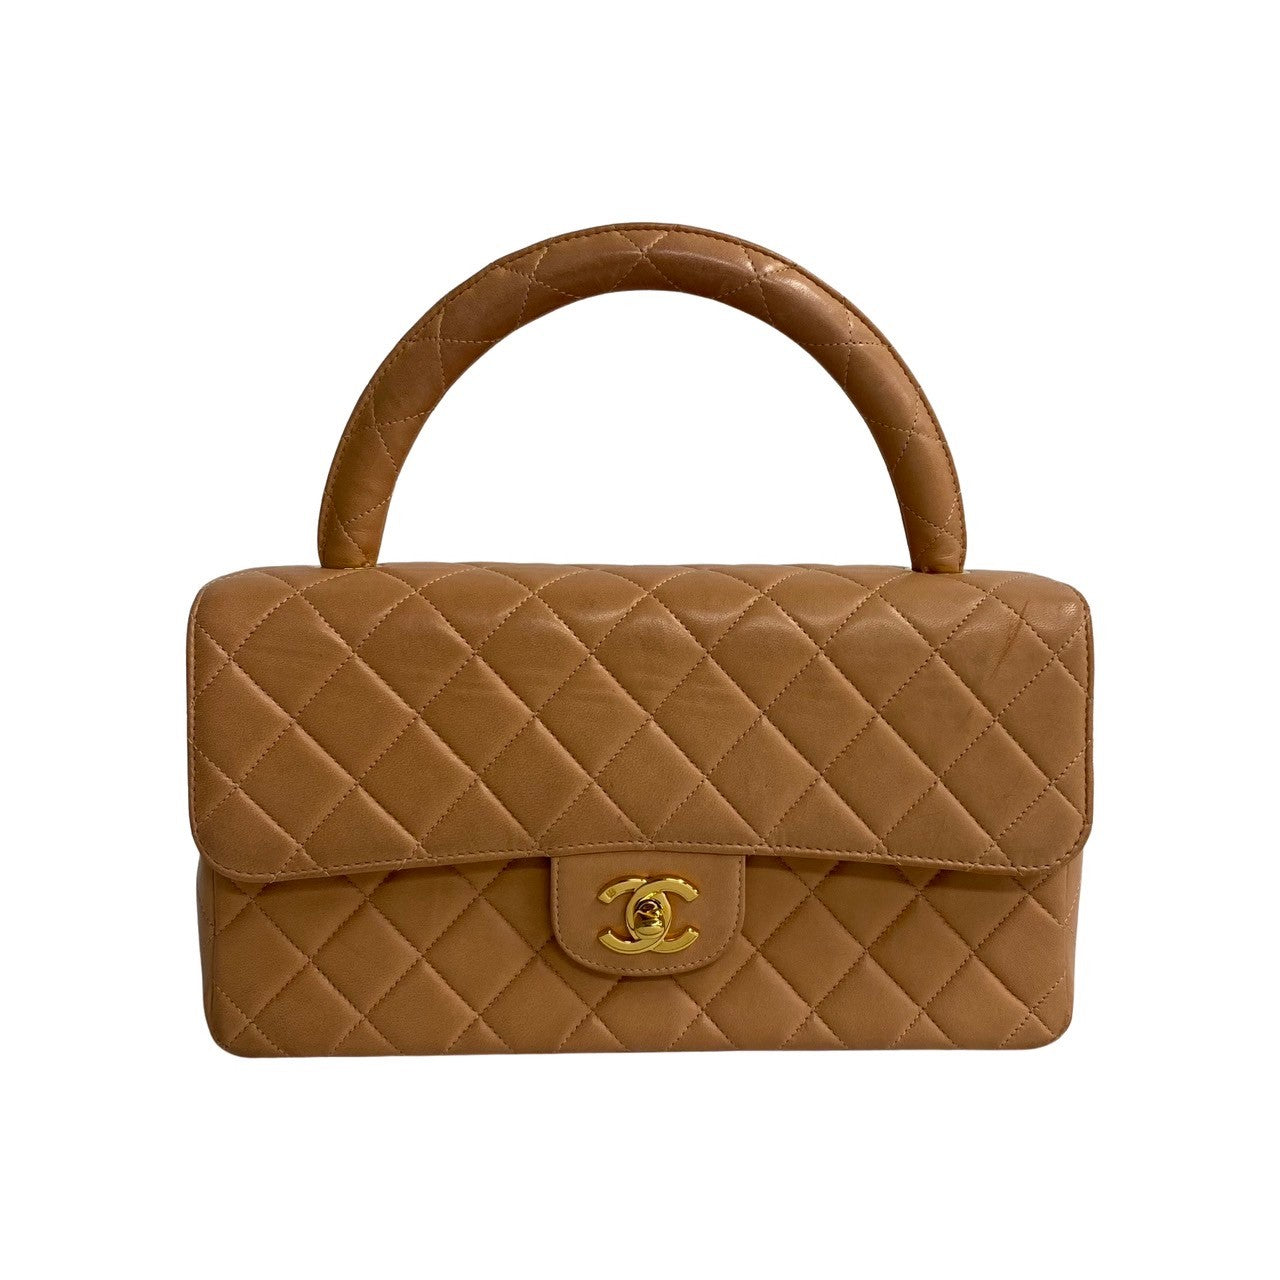 Chanel CC Matelasse Top Handle Bag Leather Handbag in Good condition